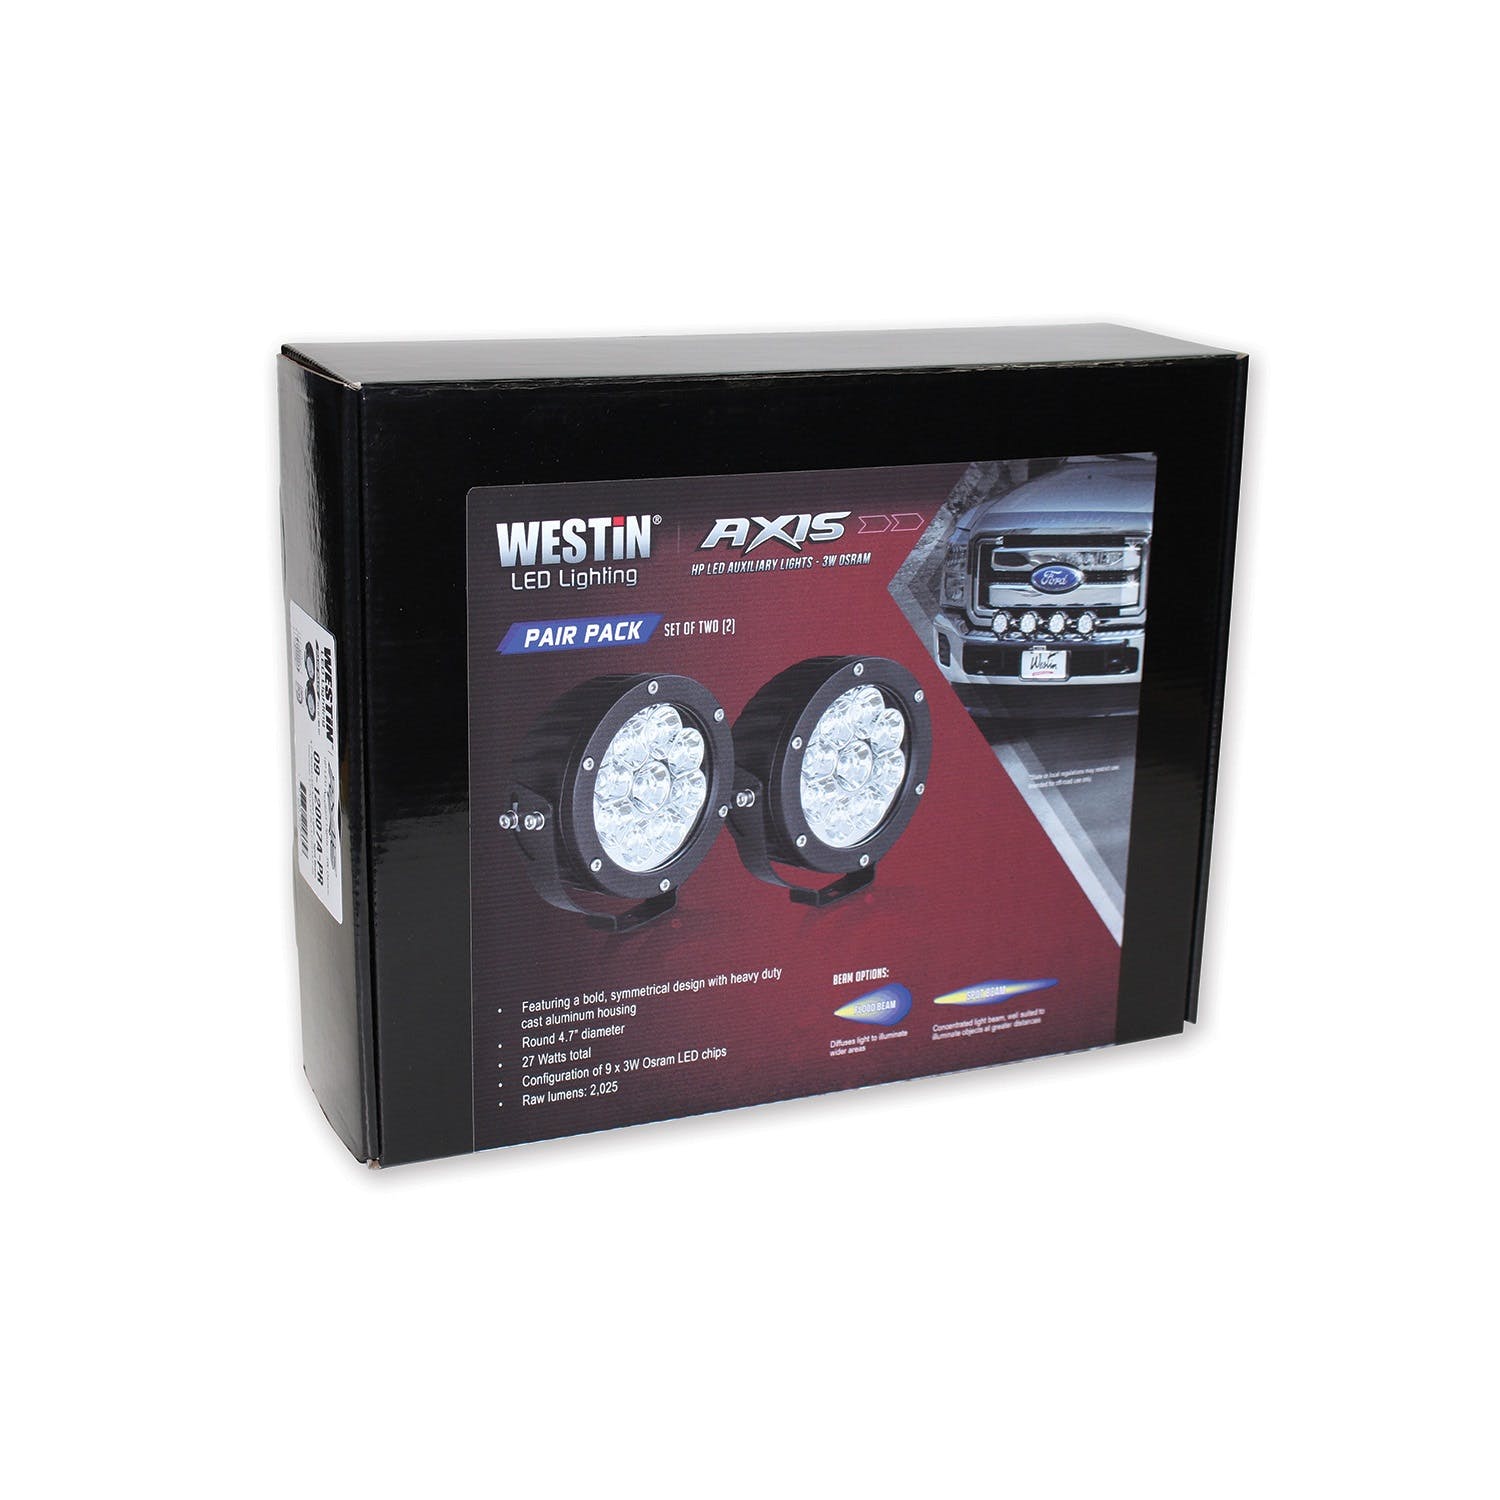 Westin Automotive 09-12007B-PR LED Auxiliary Light 4.75 inch Round Flood with 3W Osram (Set of 2)